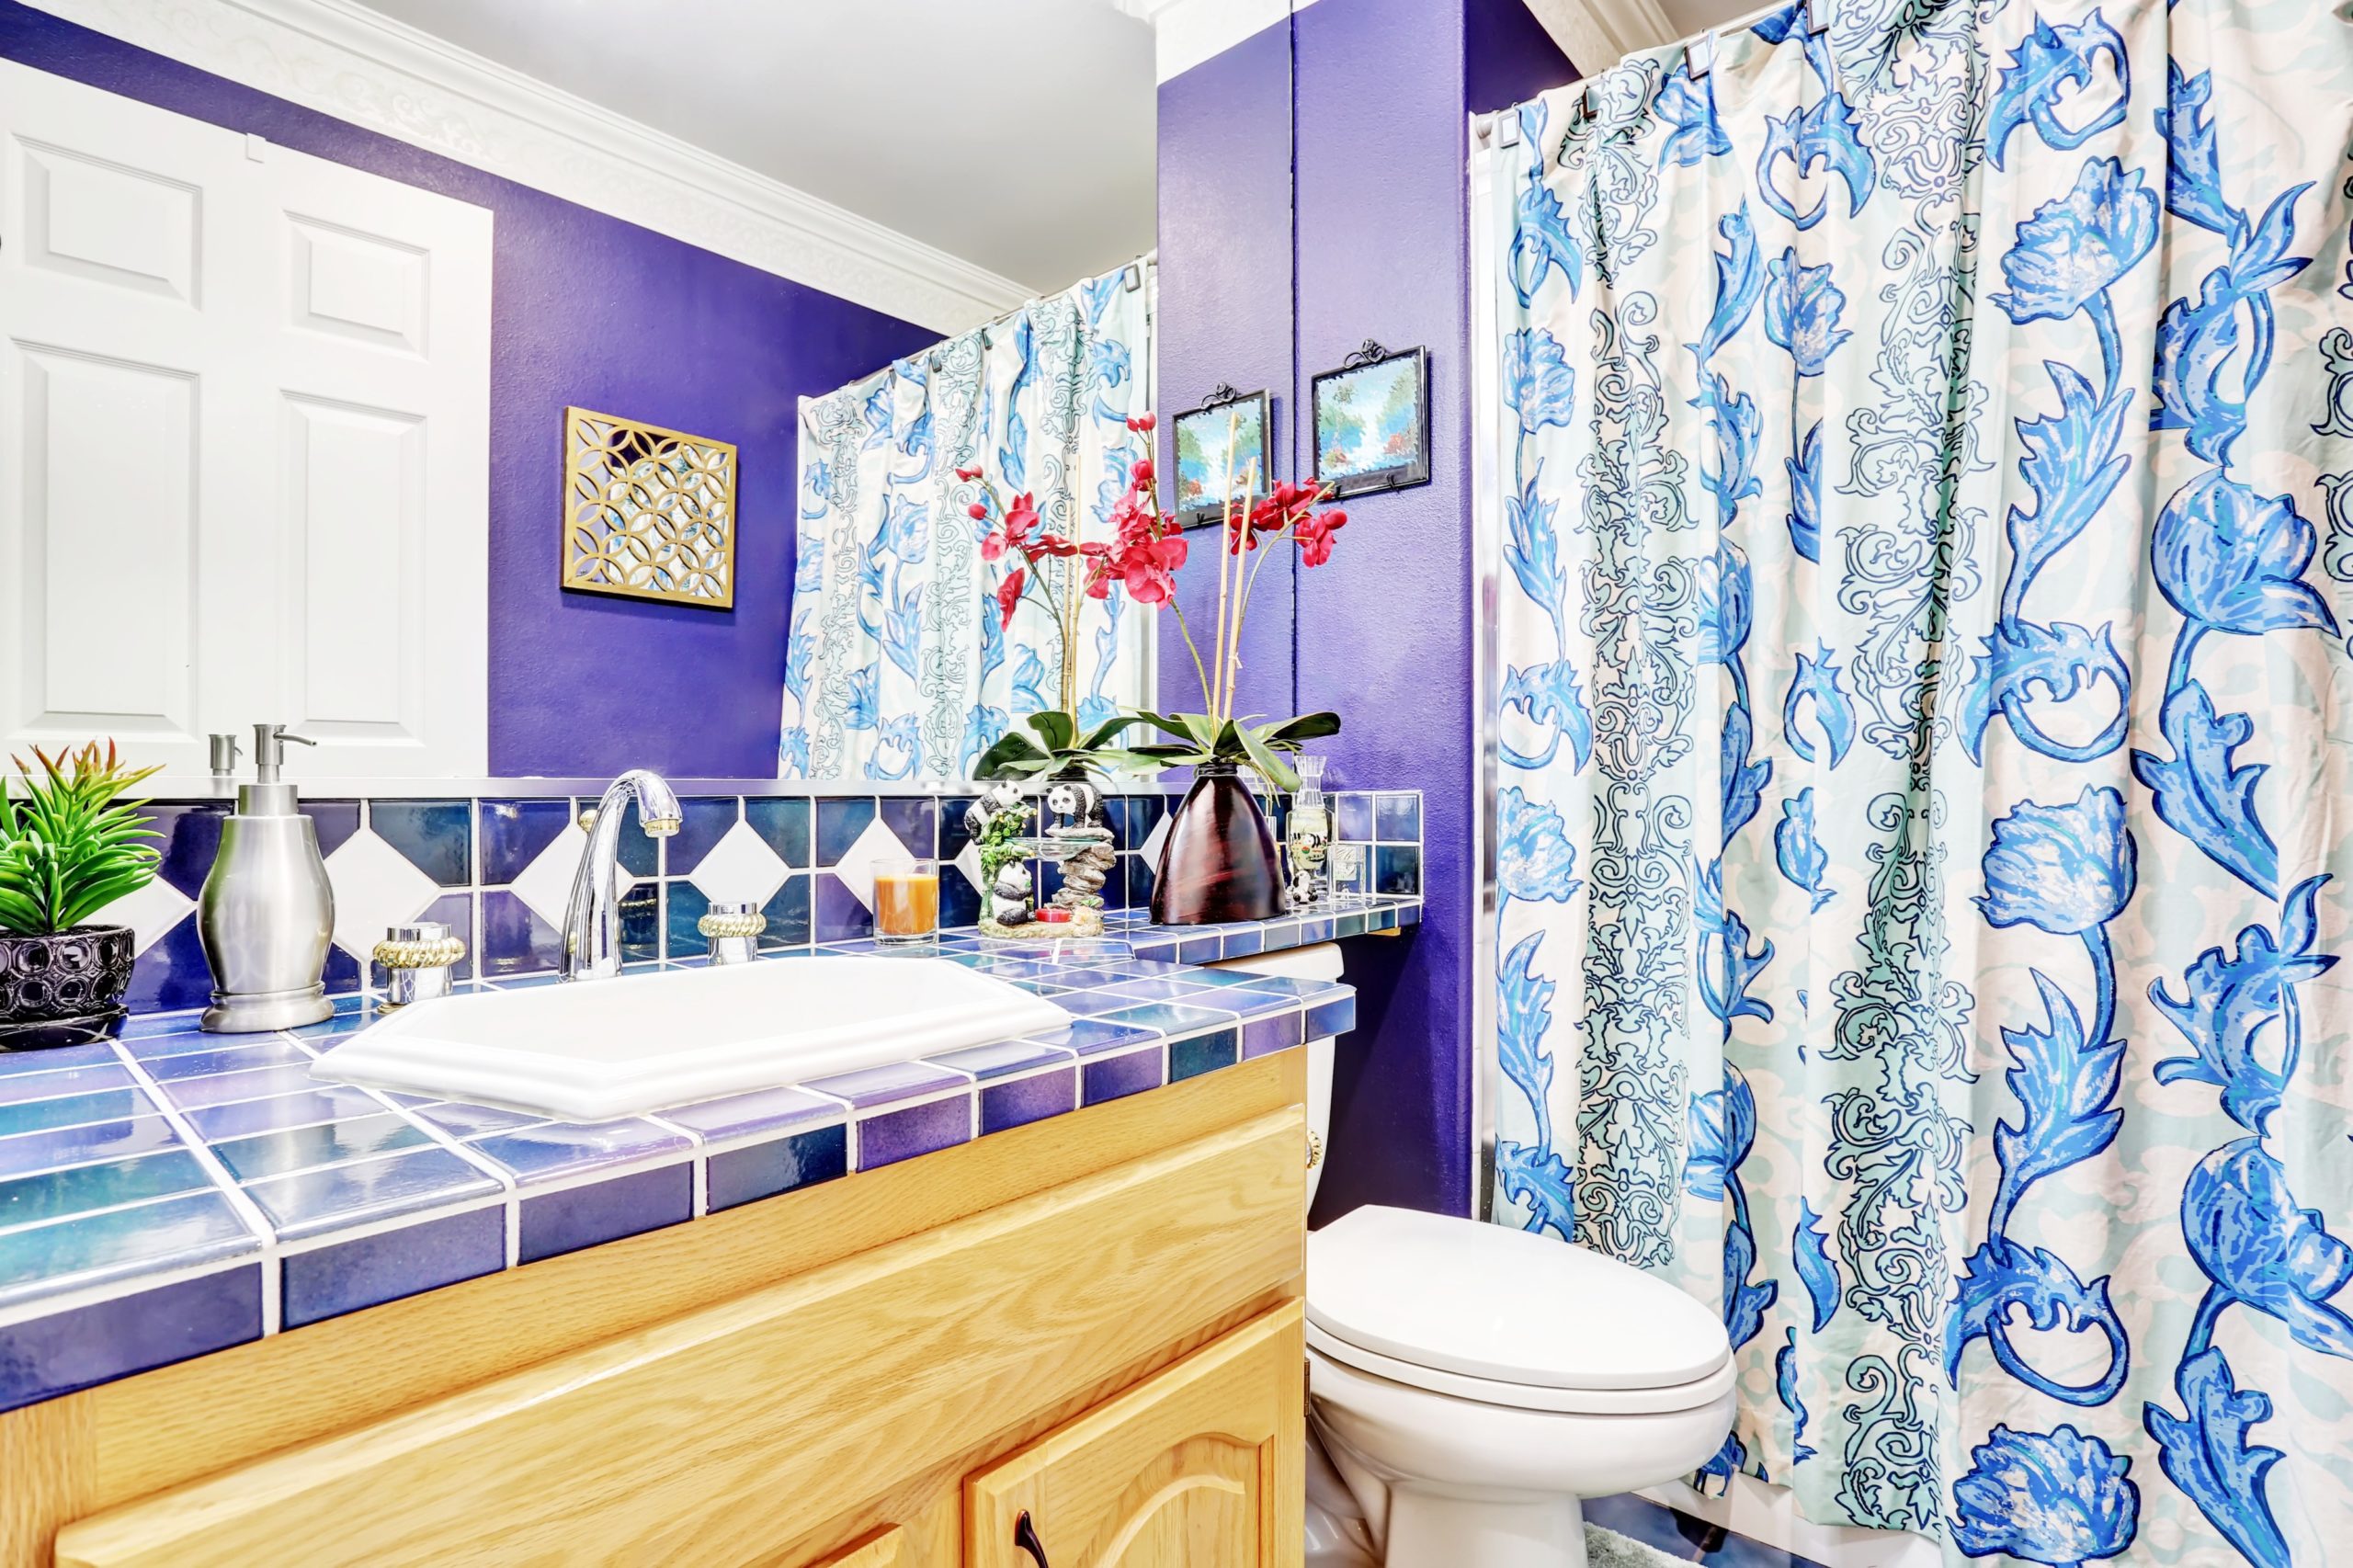 <img src="blue.jpg" alt="blue and white printed bathroom"/> 